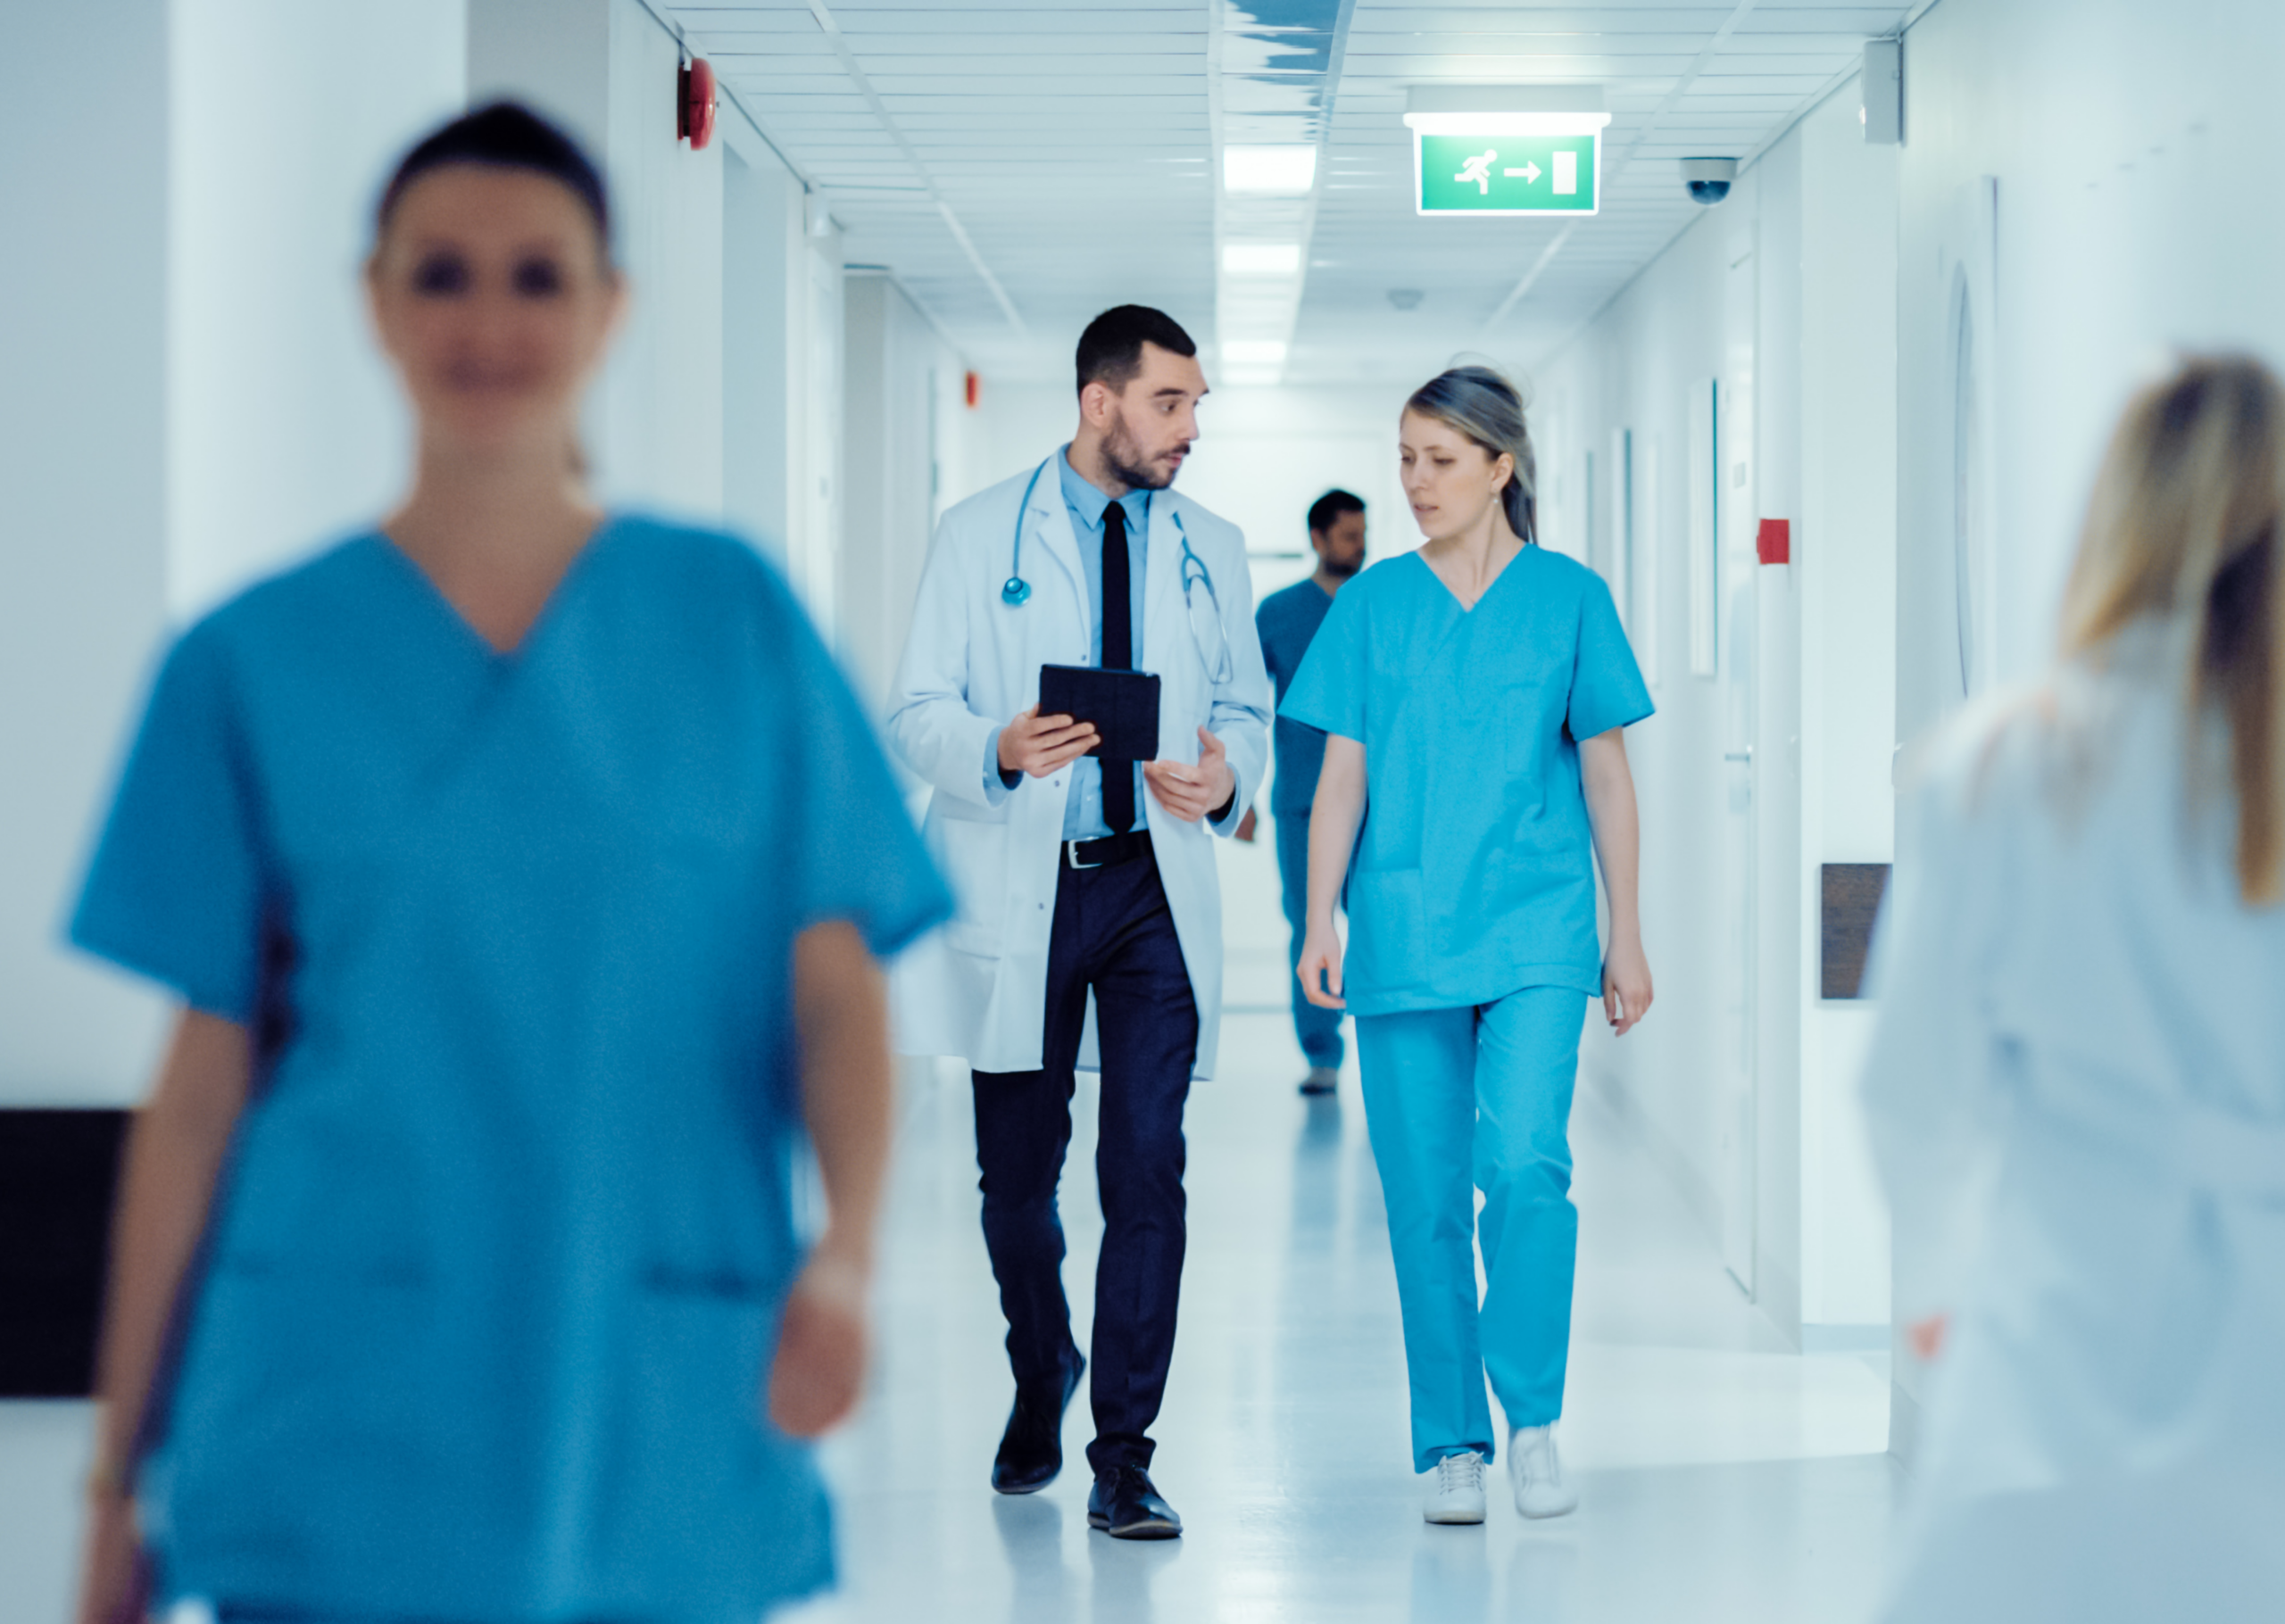 Doctors walking through a hospital hallway.